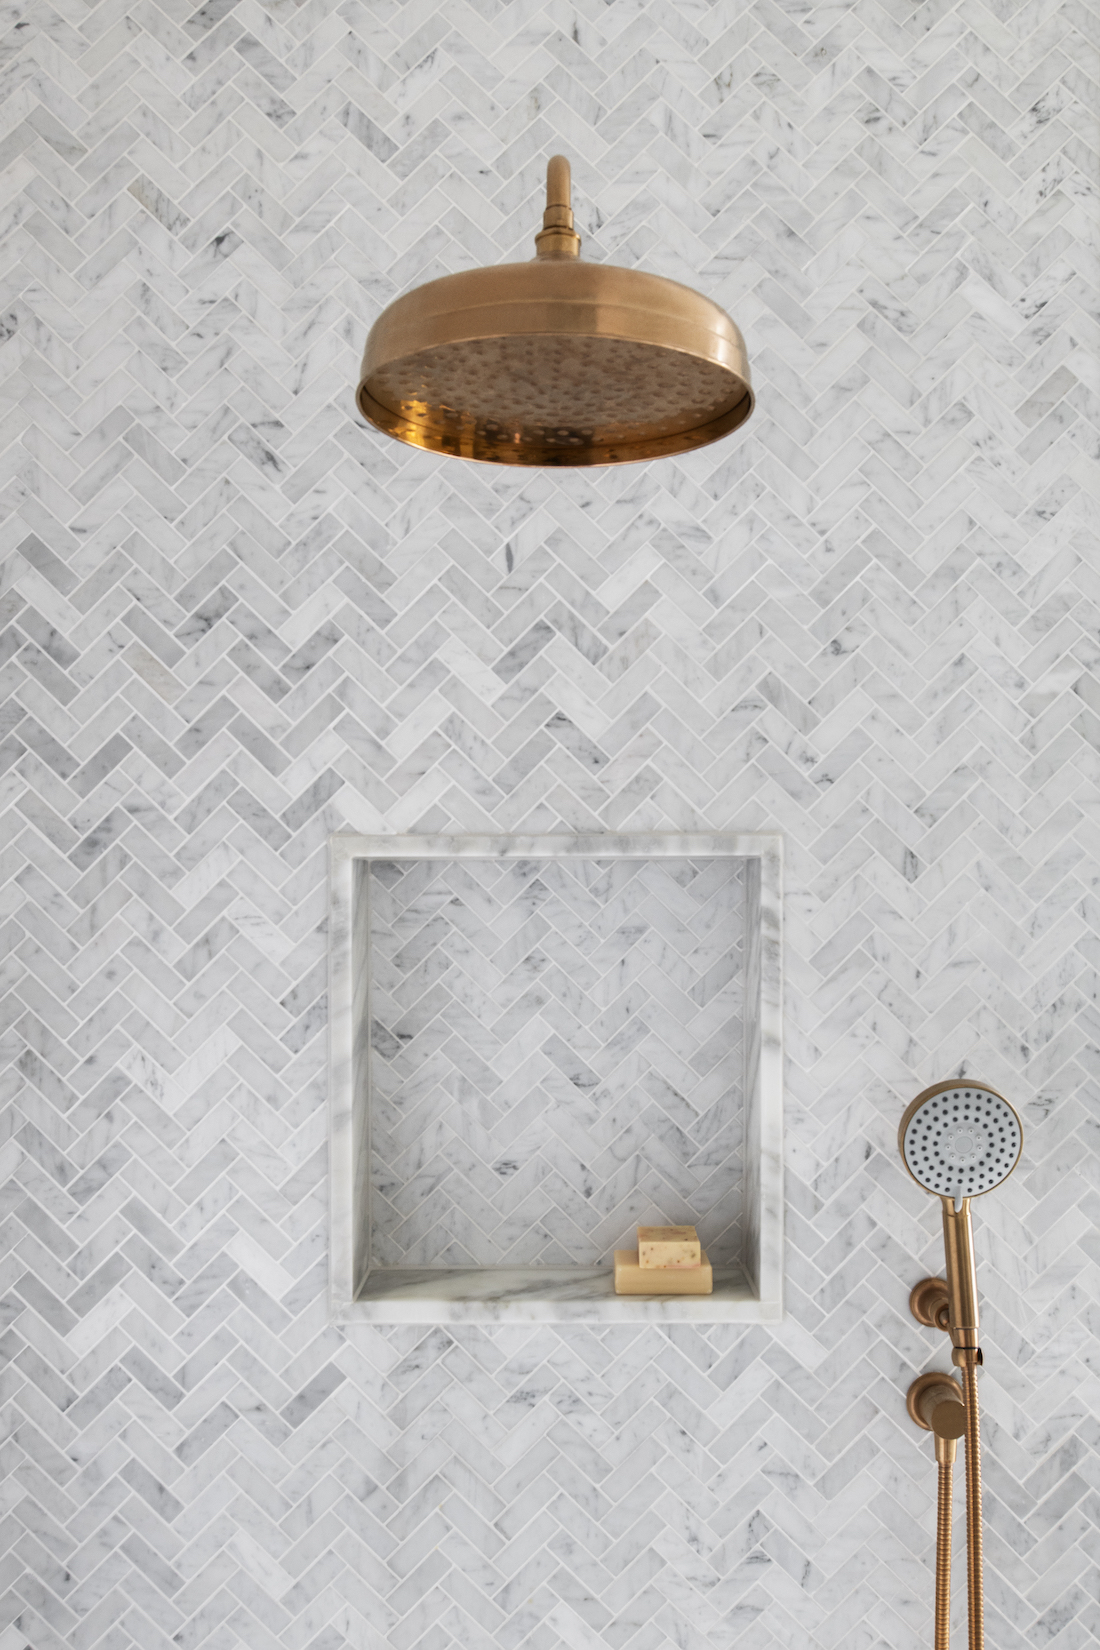 Transcontinental Residence herringbone marble tiles and brass showerhead